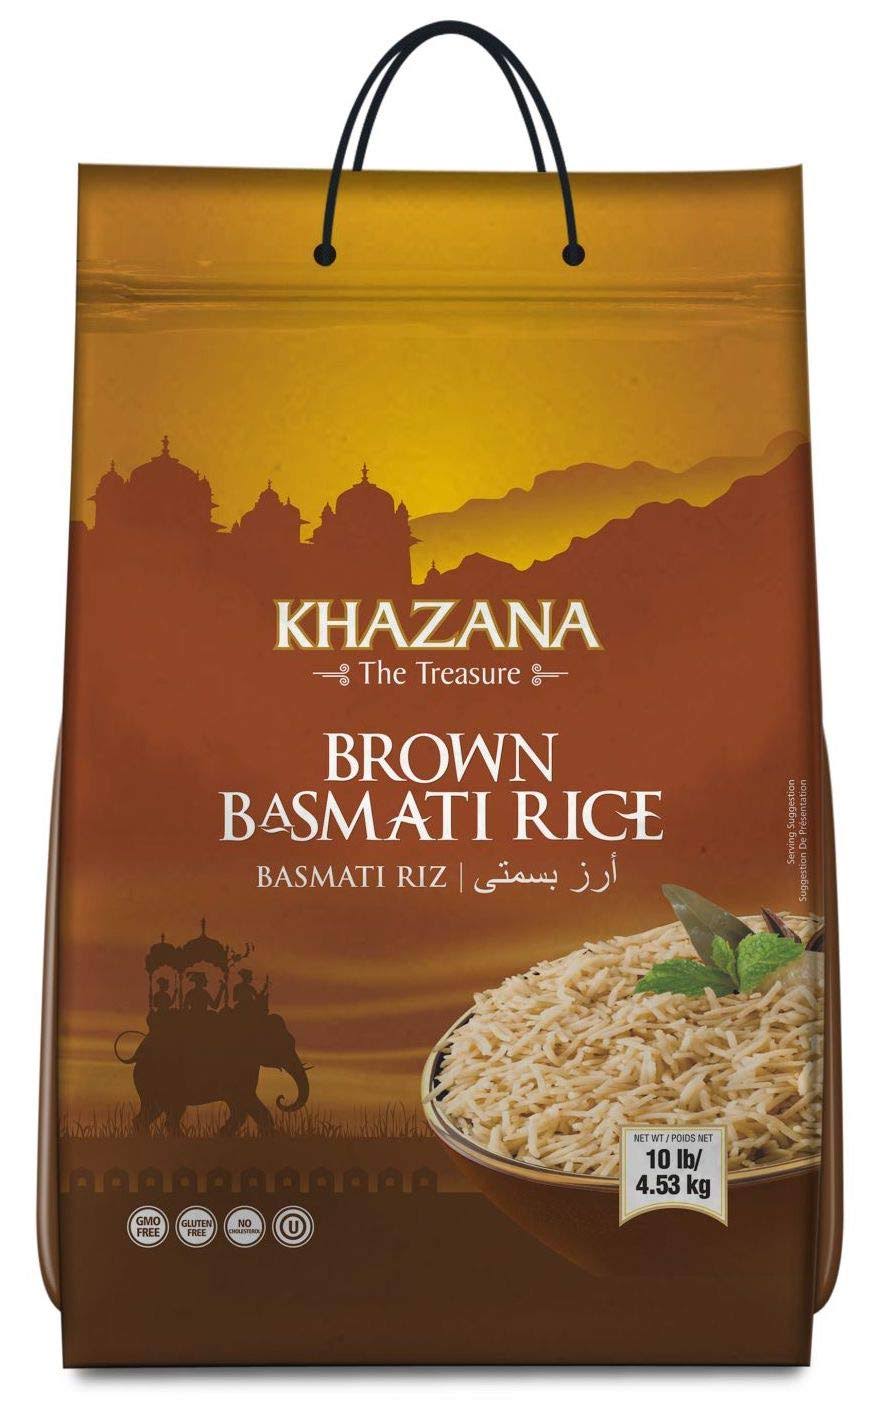 Khazana Premium Brown Basmati Rice - 10lb Bag